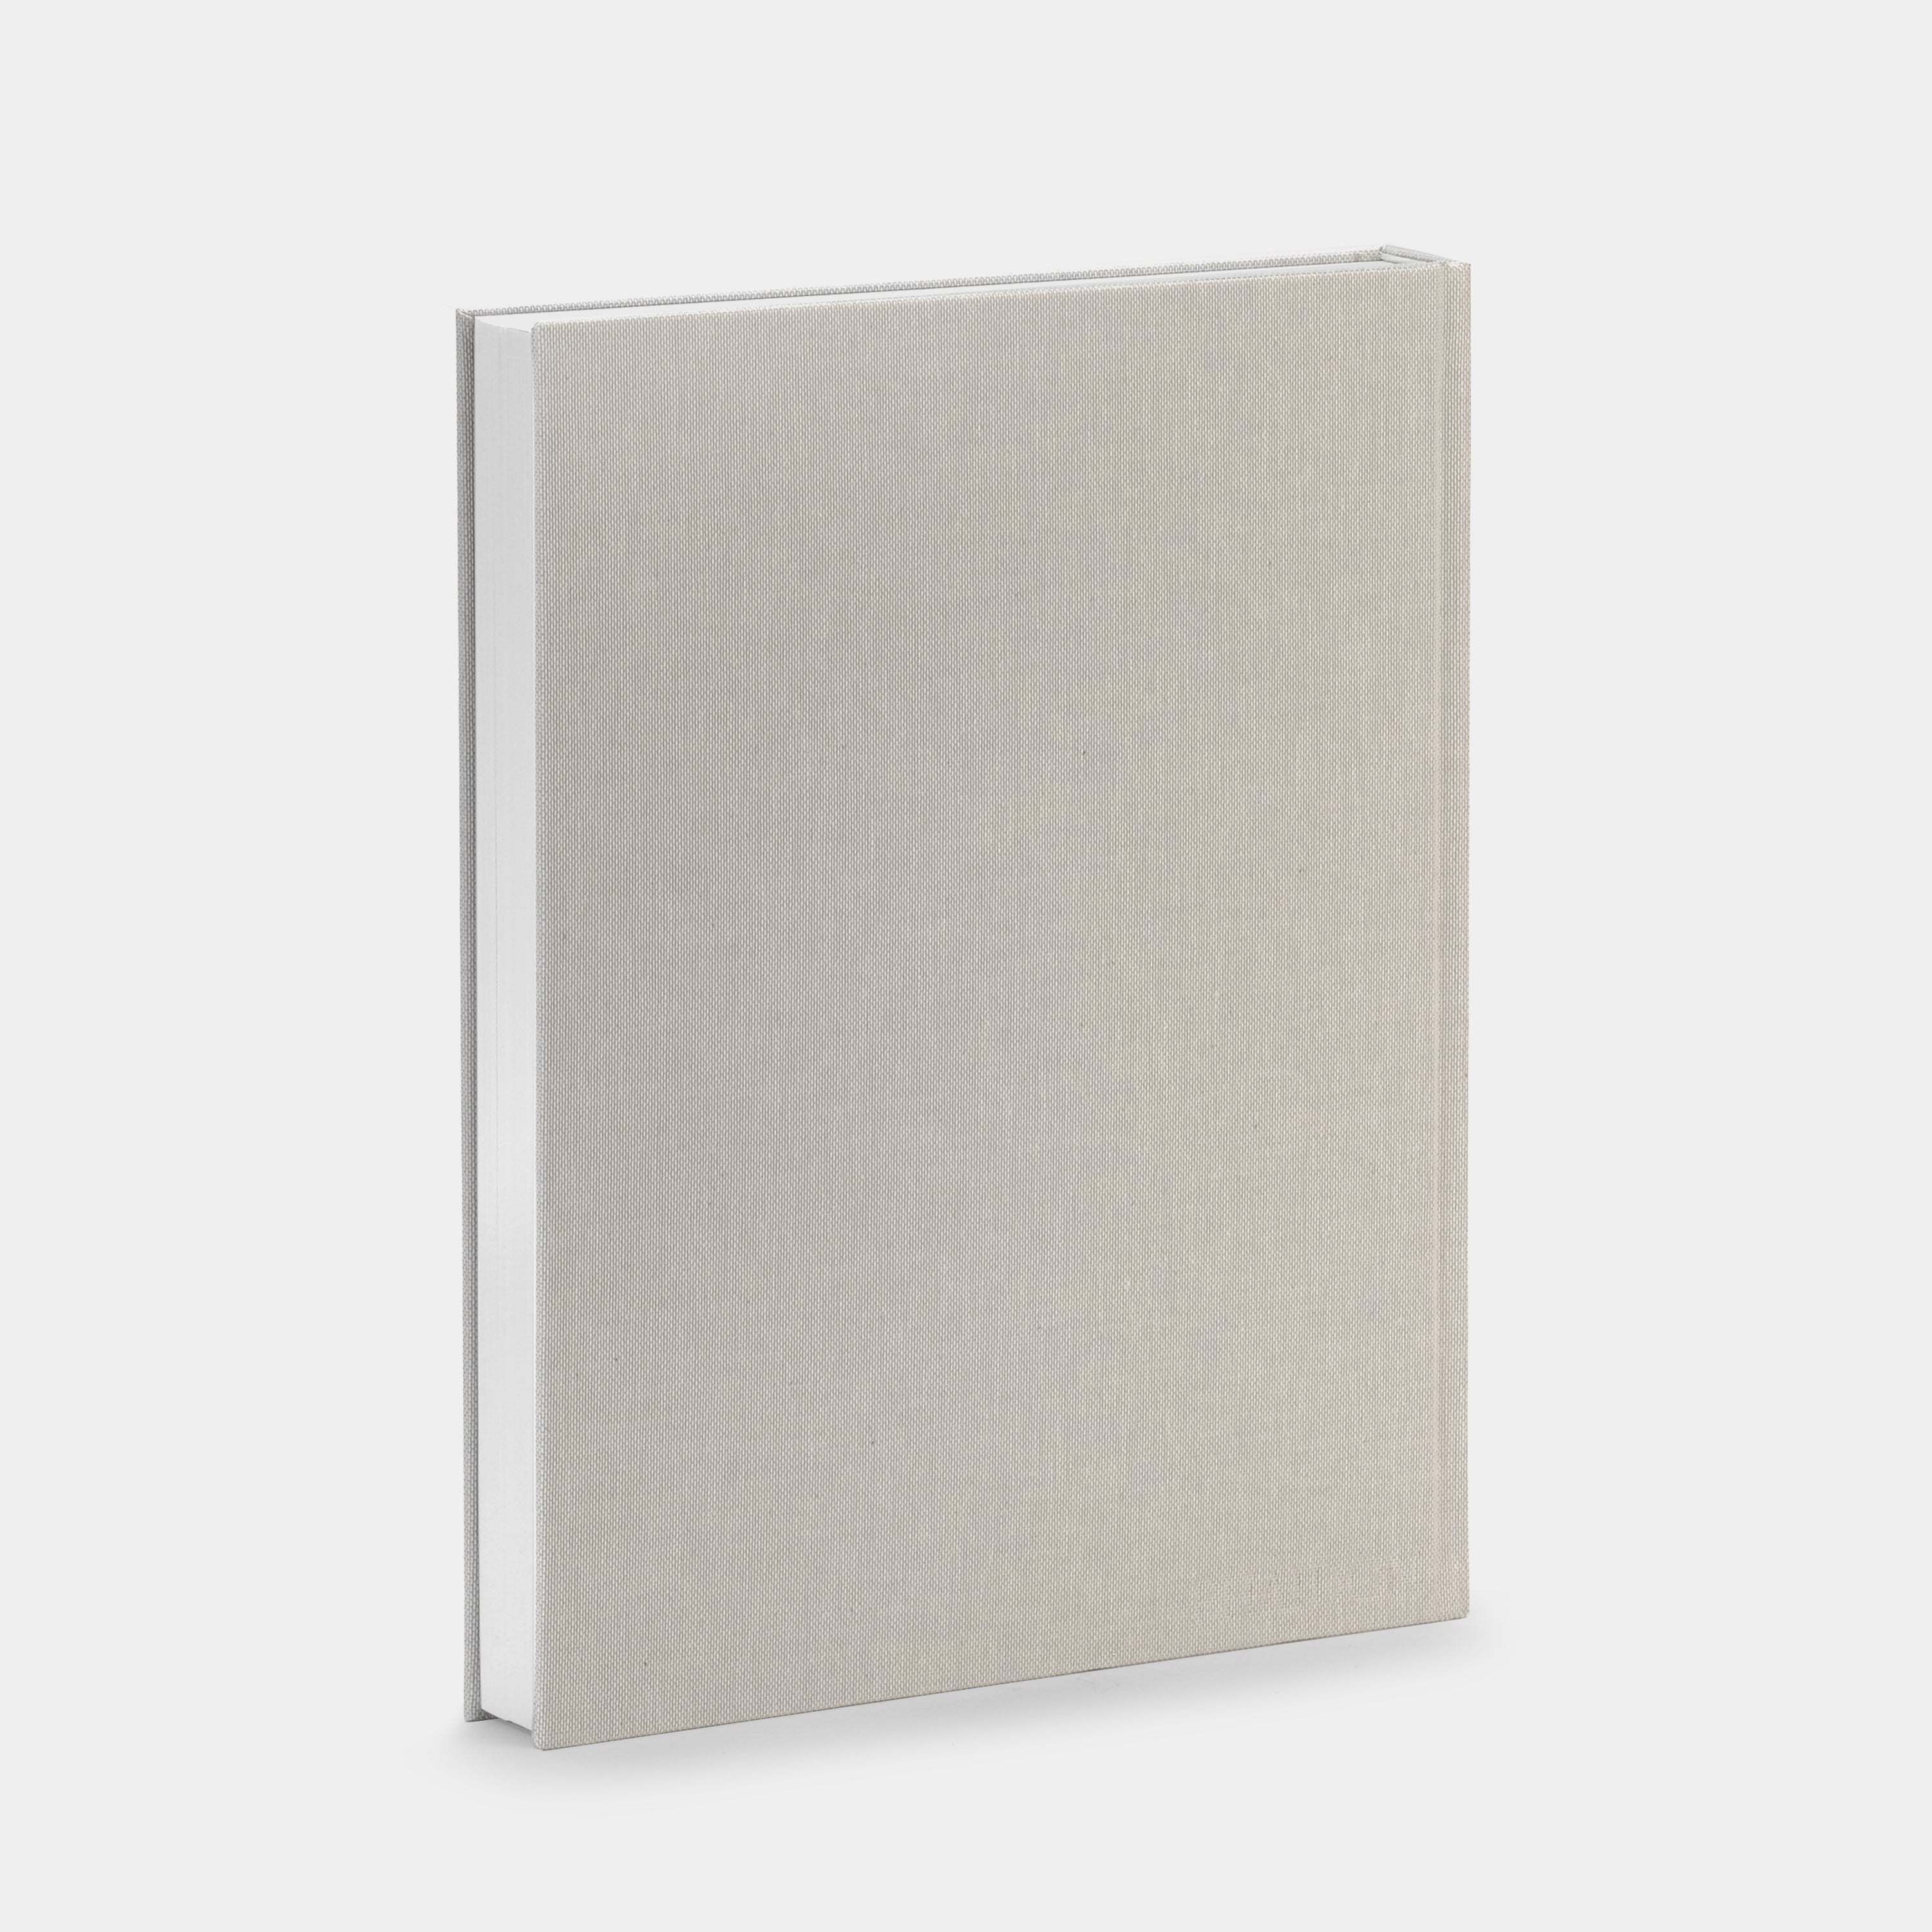 John Pawson: Making Life Simpler Phaidon Book